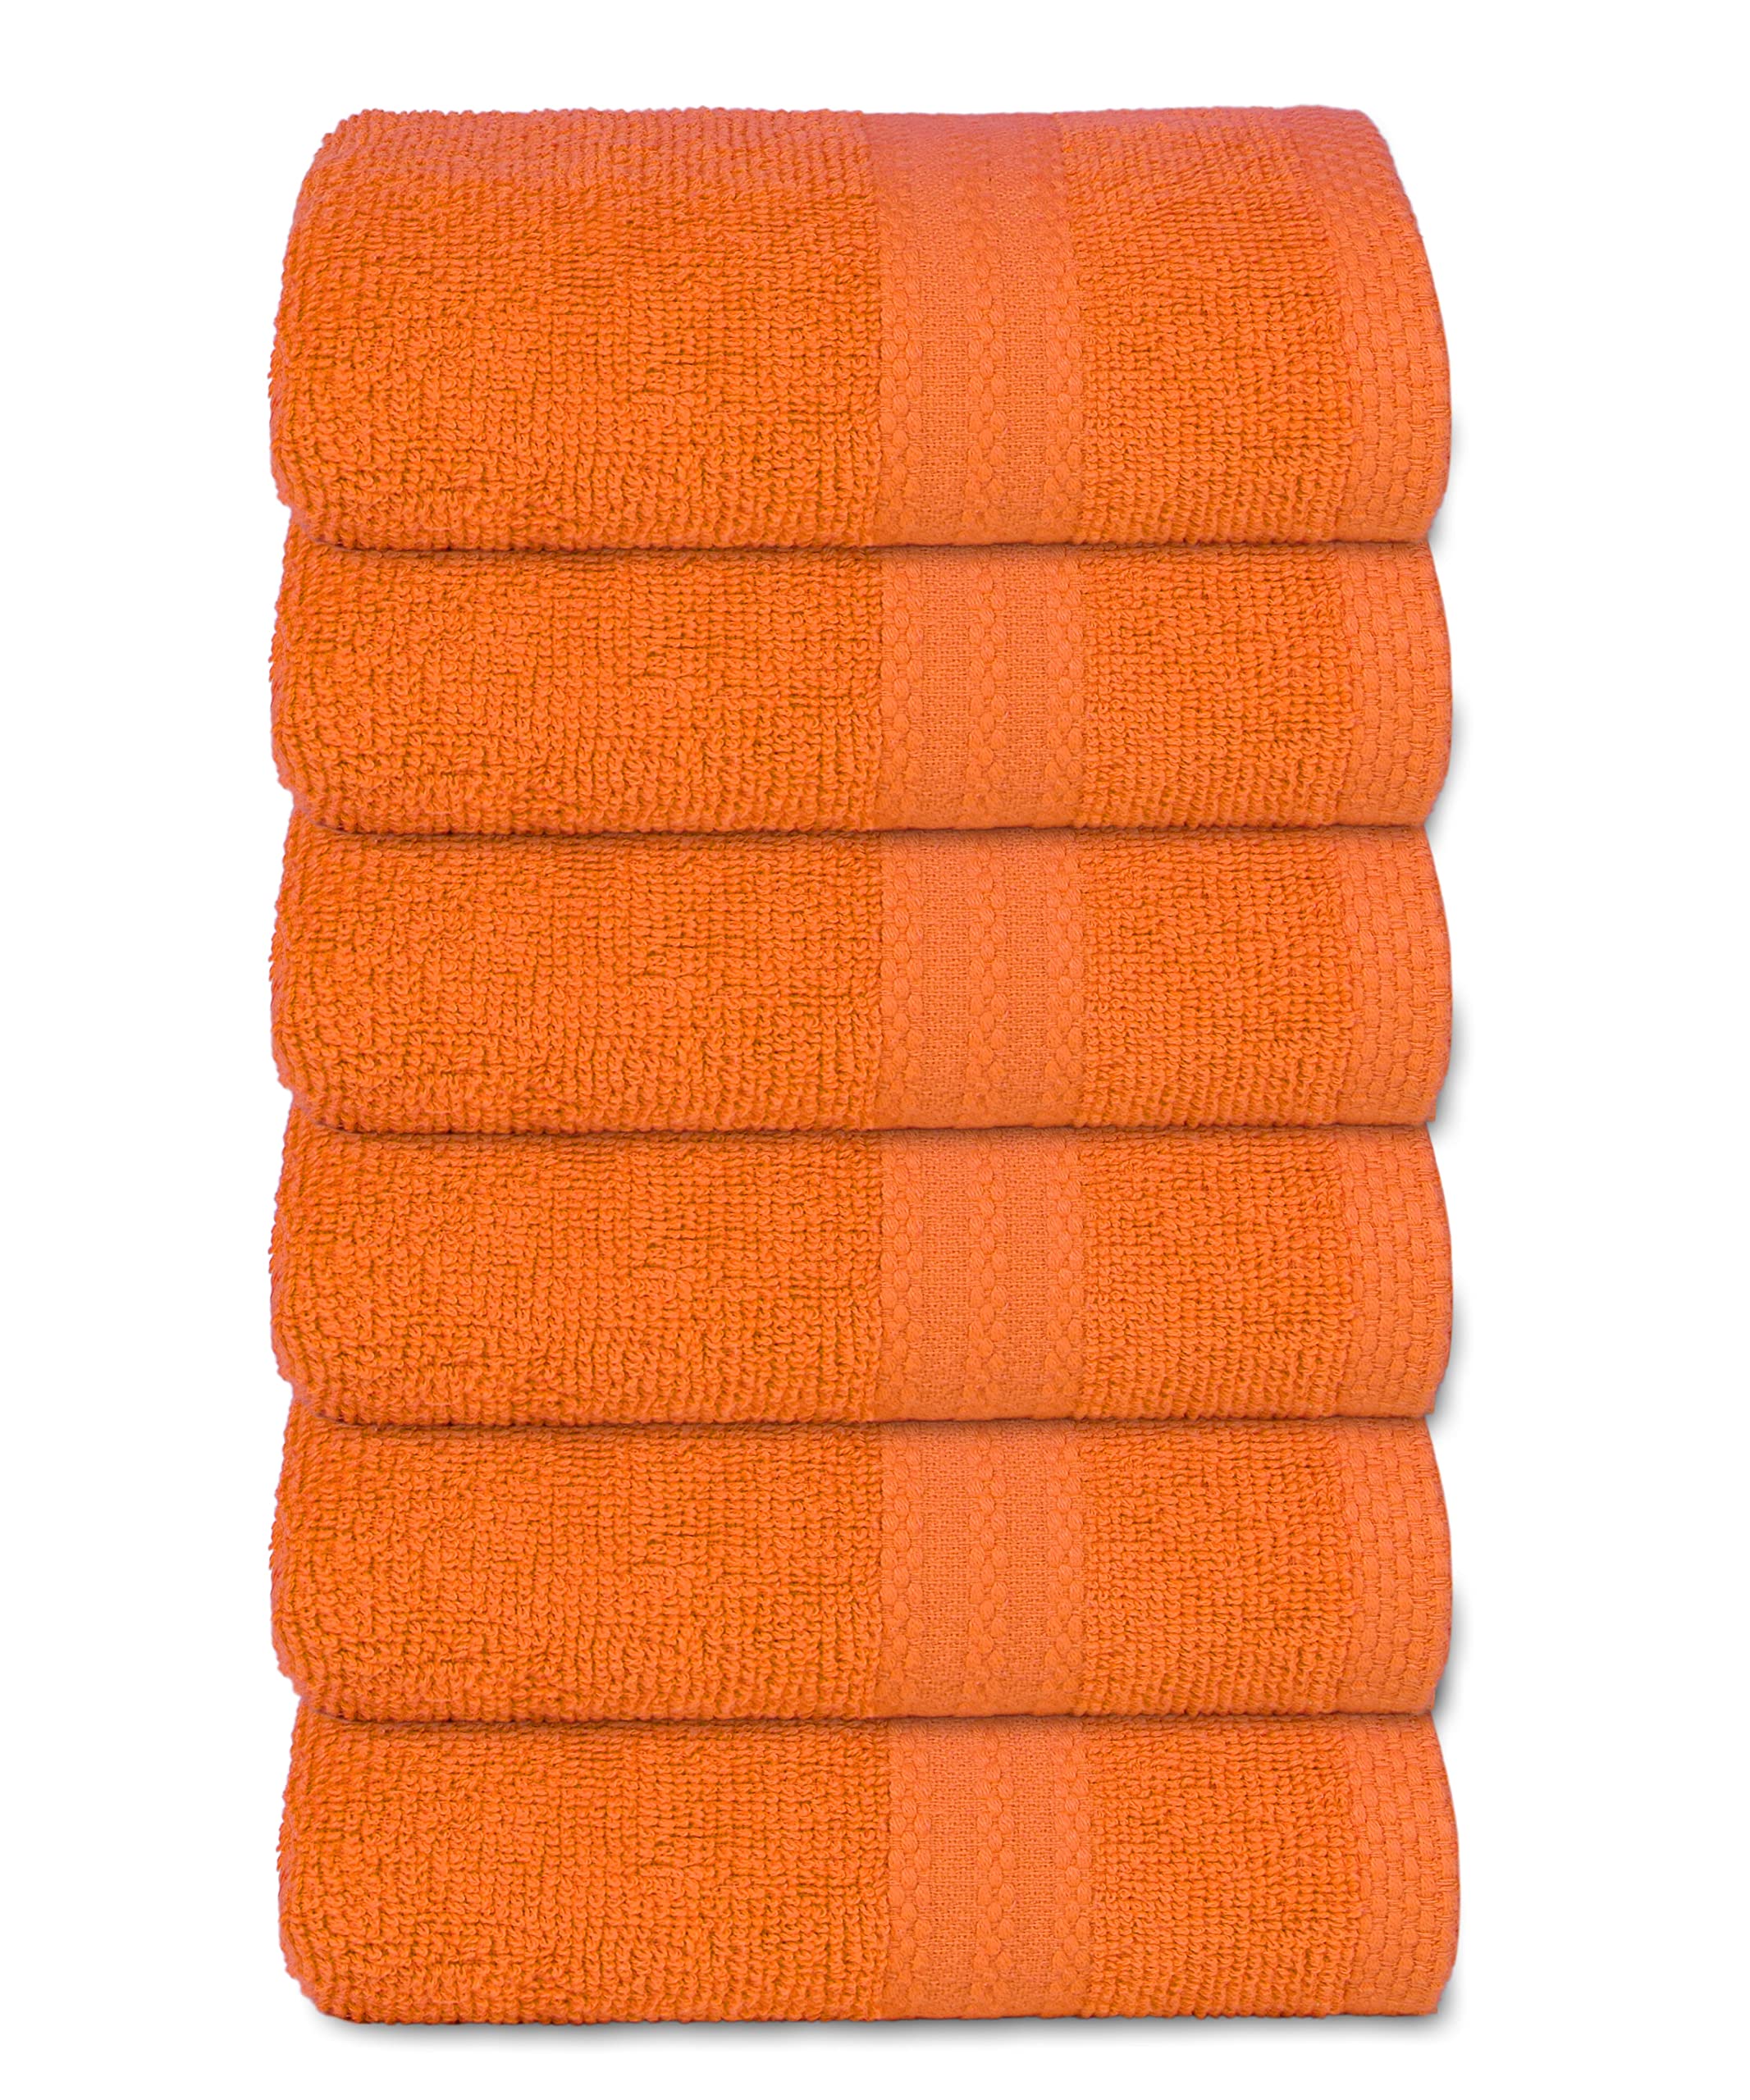 NEW Lasting Color Hand Towel Bright White 16 x 28 100% Cotton